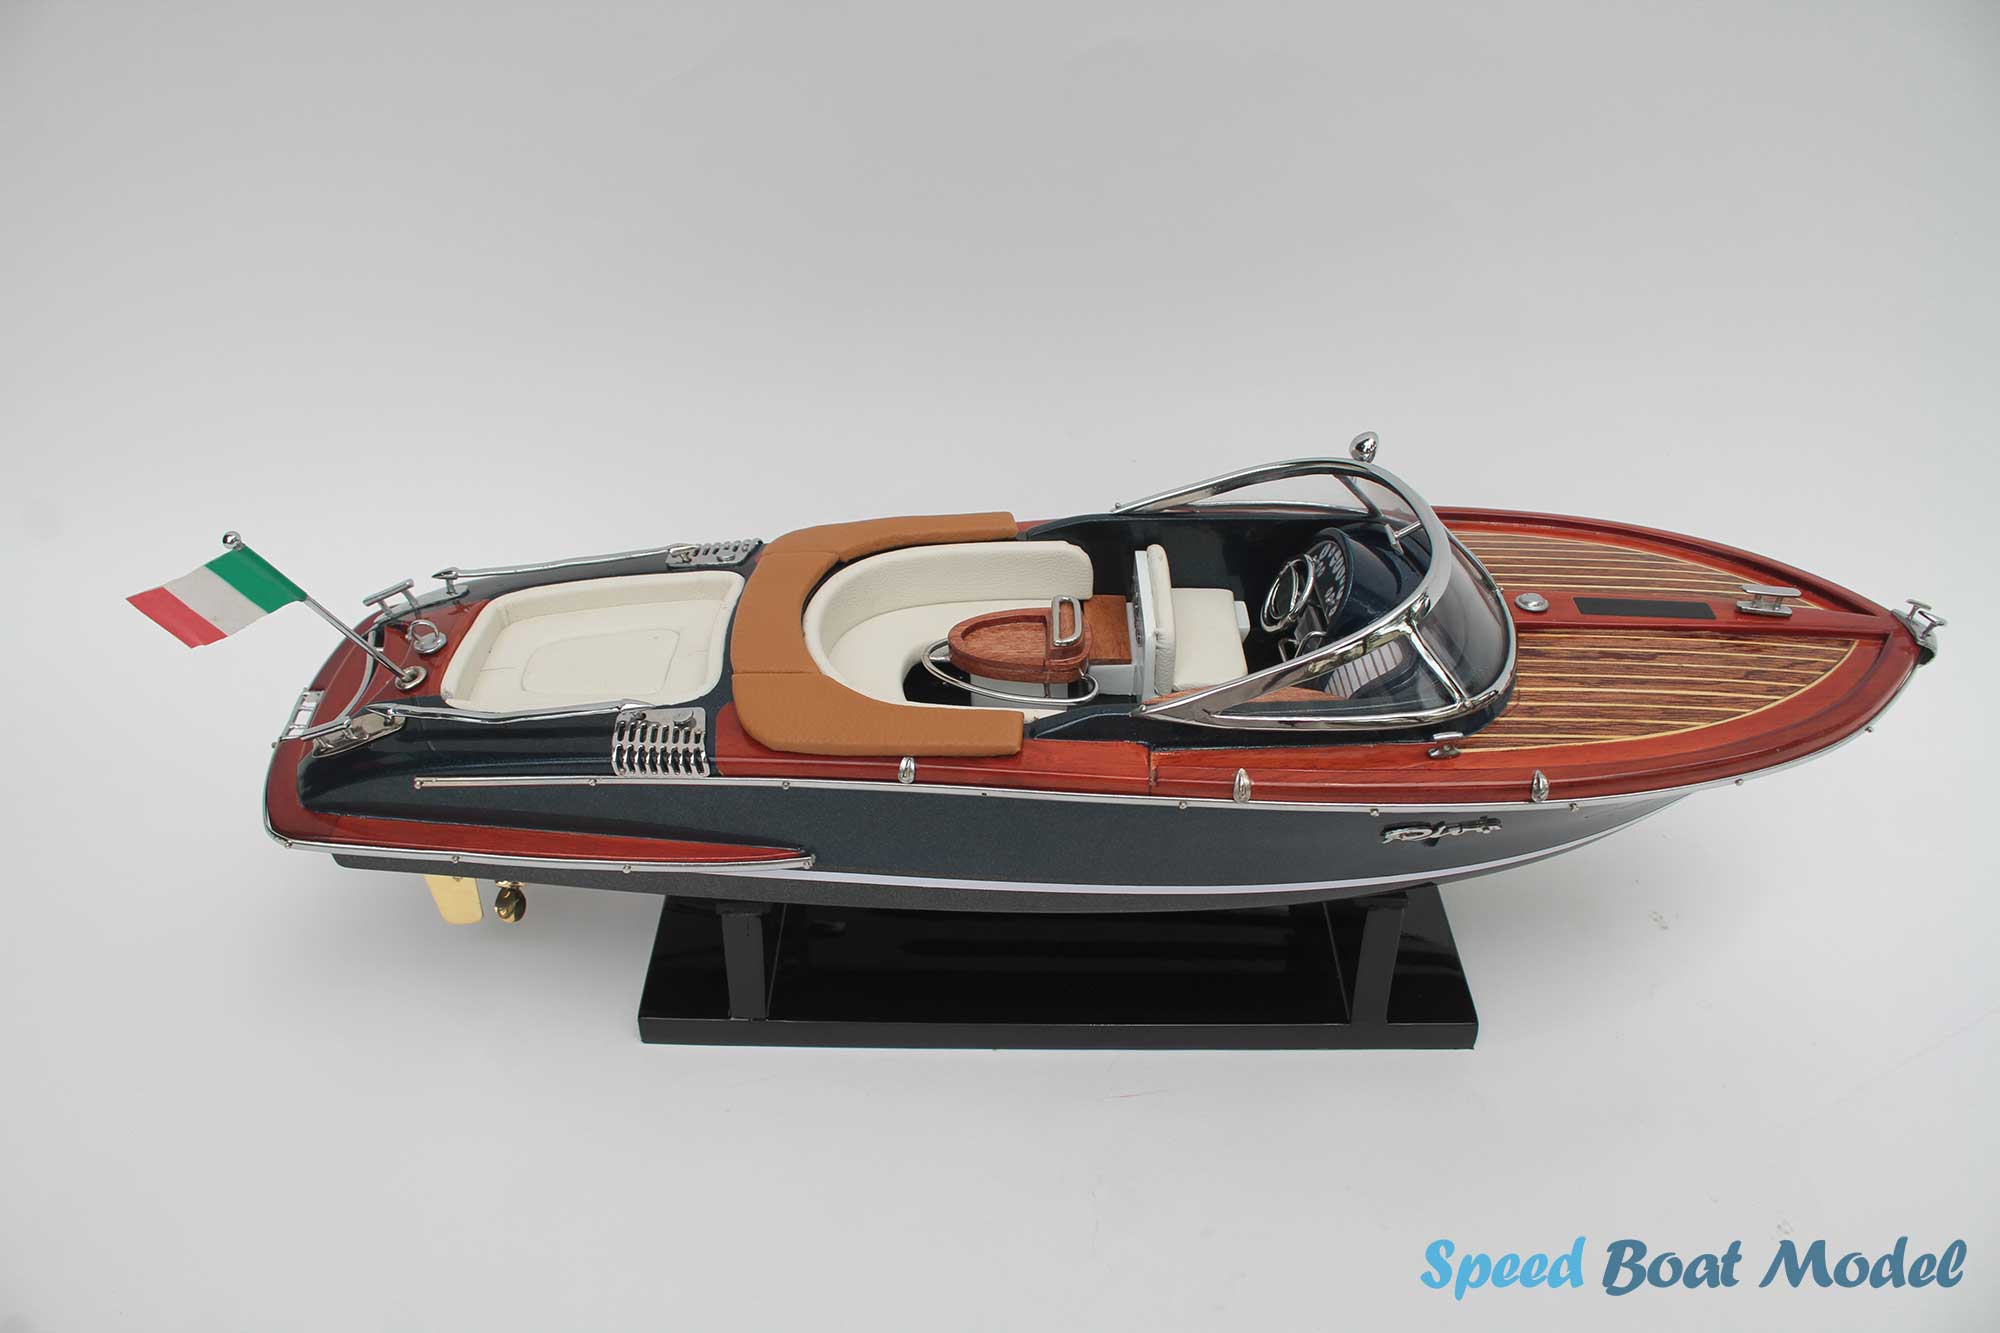 Italian Riva Aquariva Gucci Speed Boat Model 16.5"